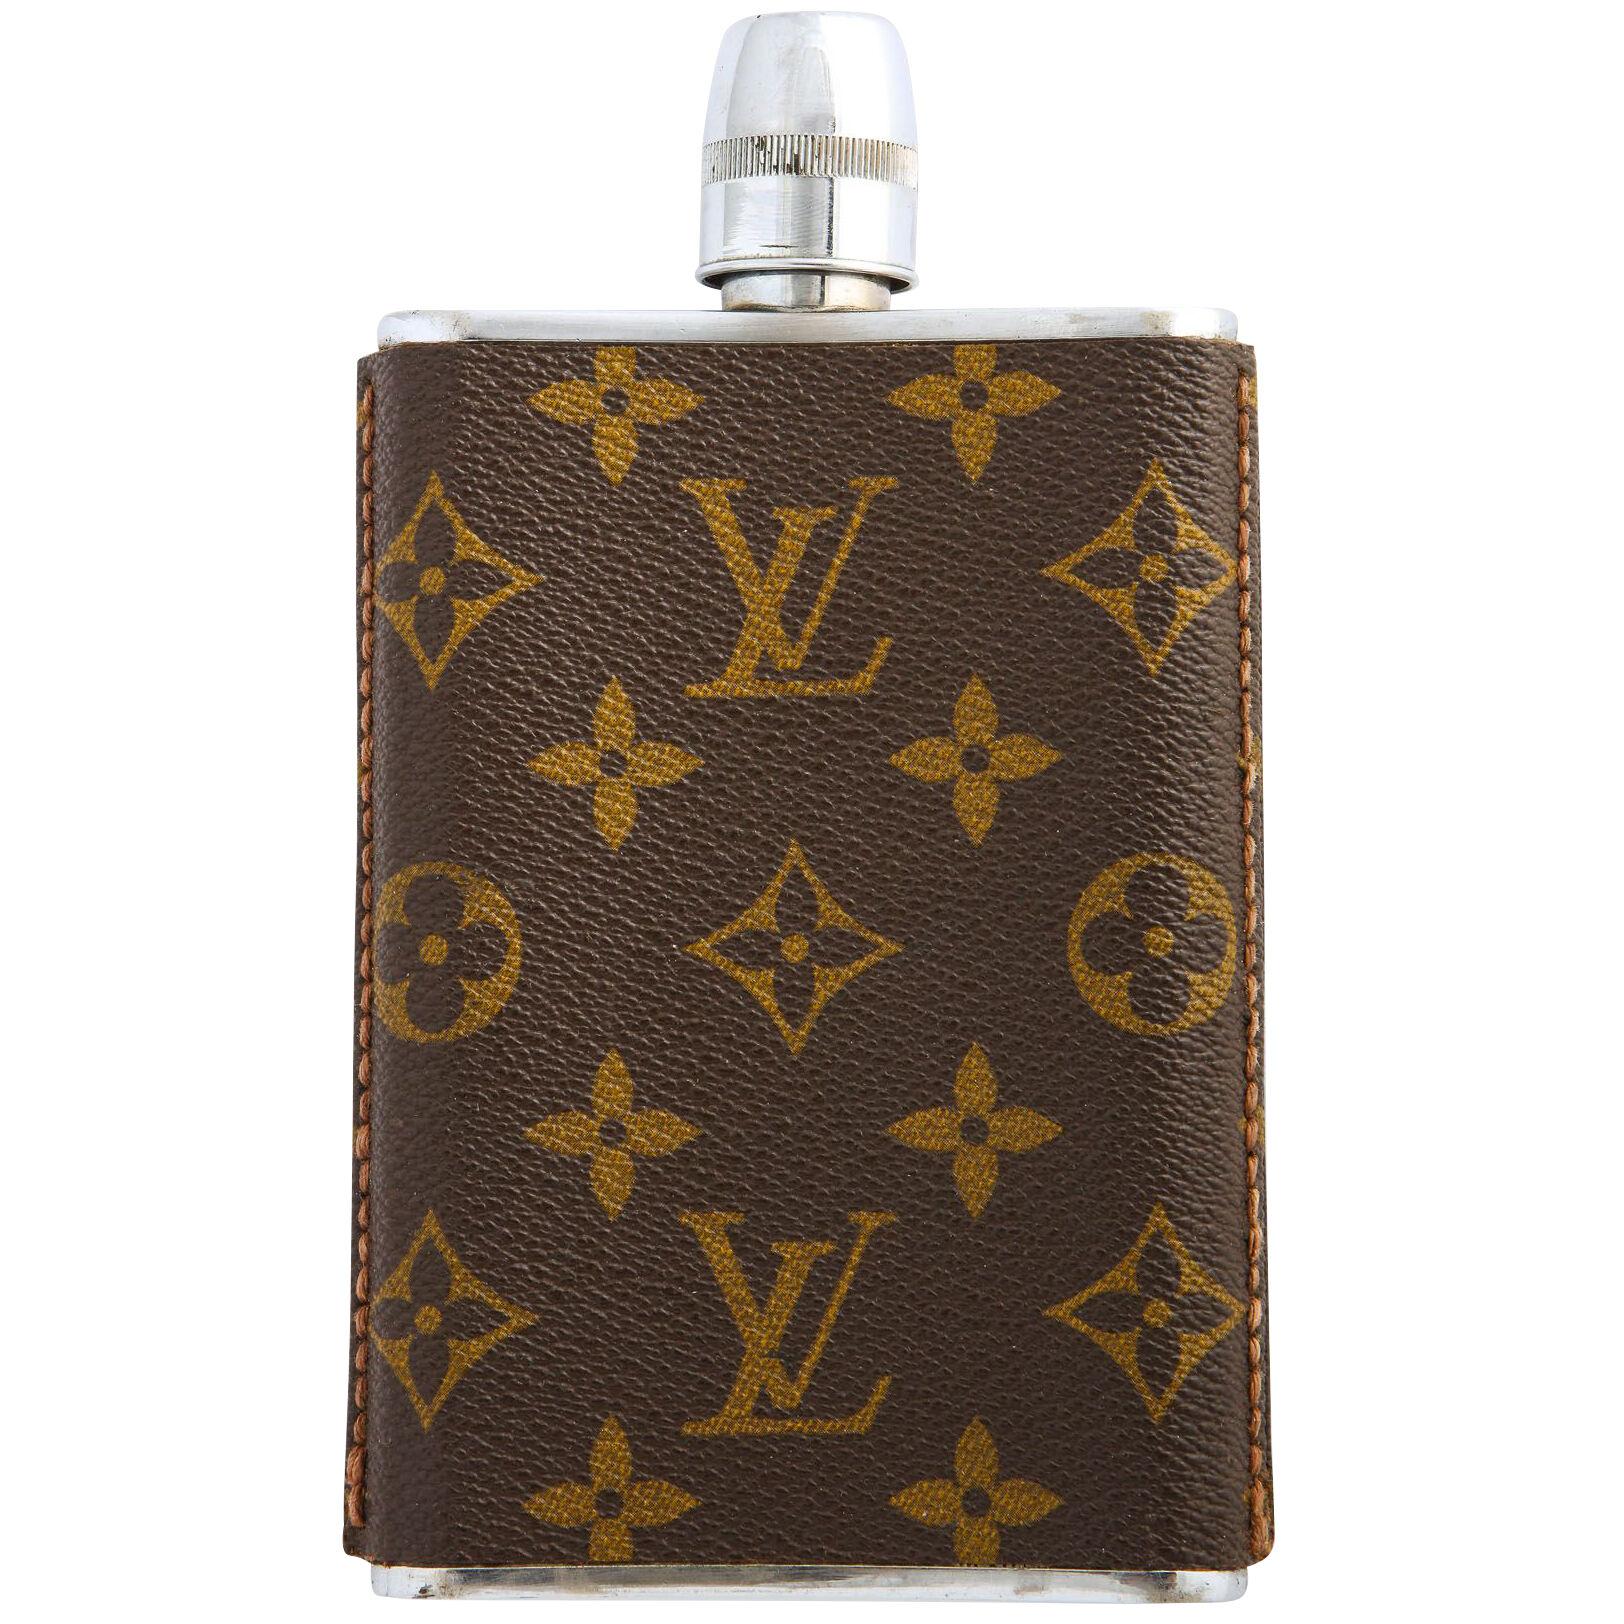 Vintage Louis Vitton Hip Flask